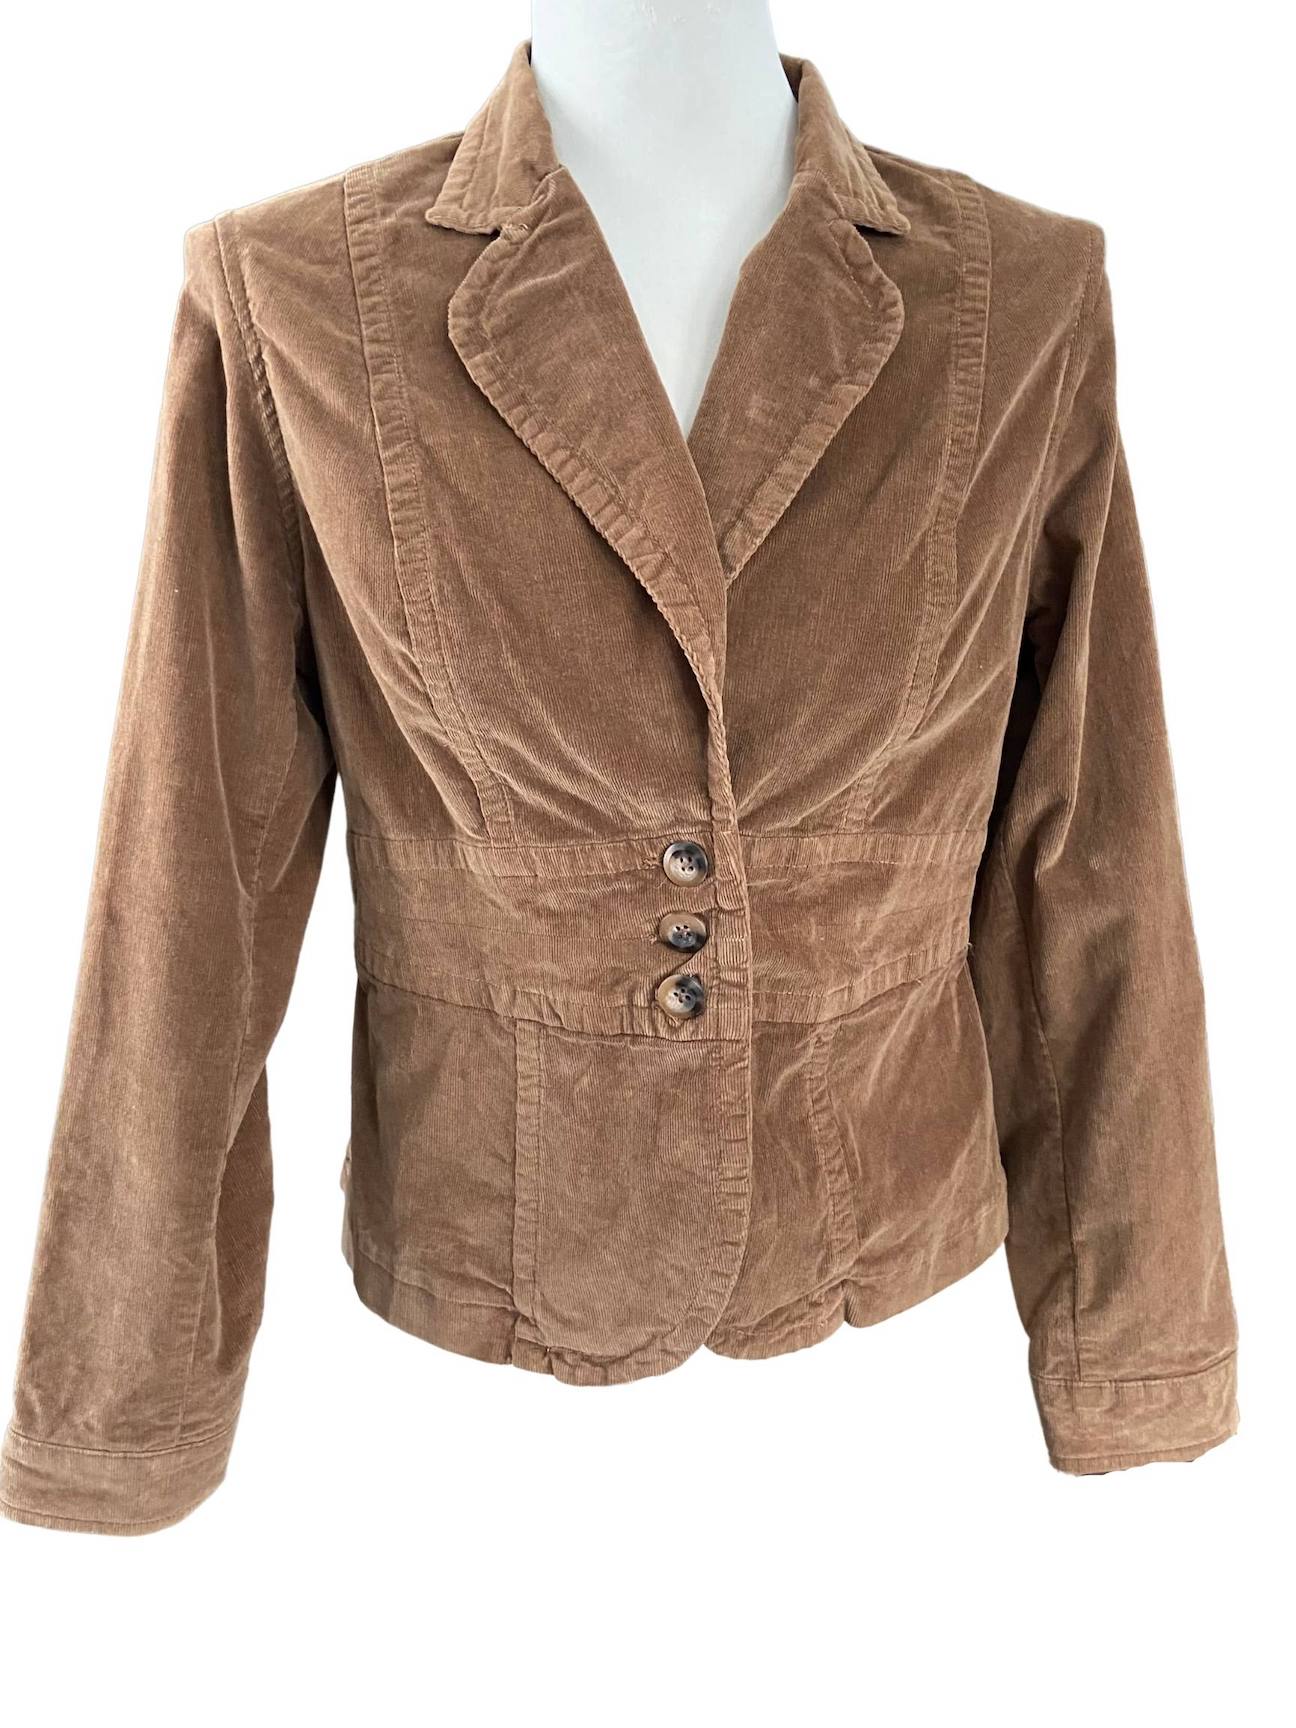 Warm Spring ANA brown cord jacket